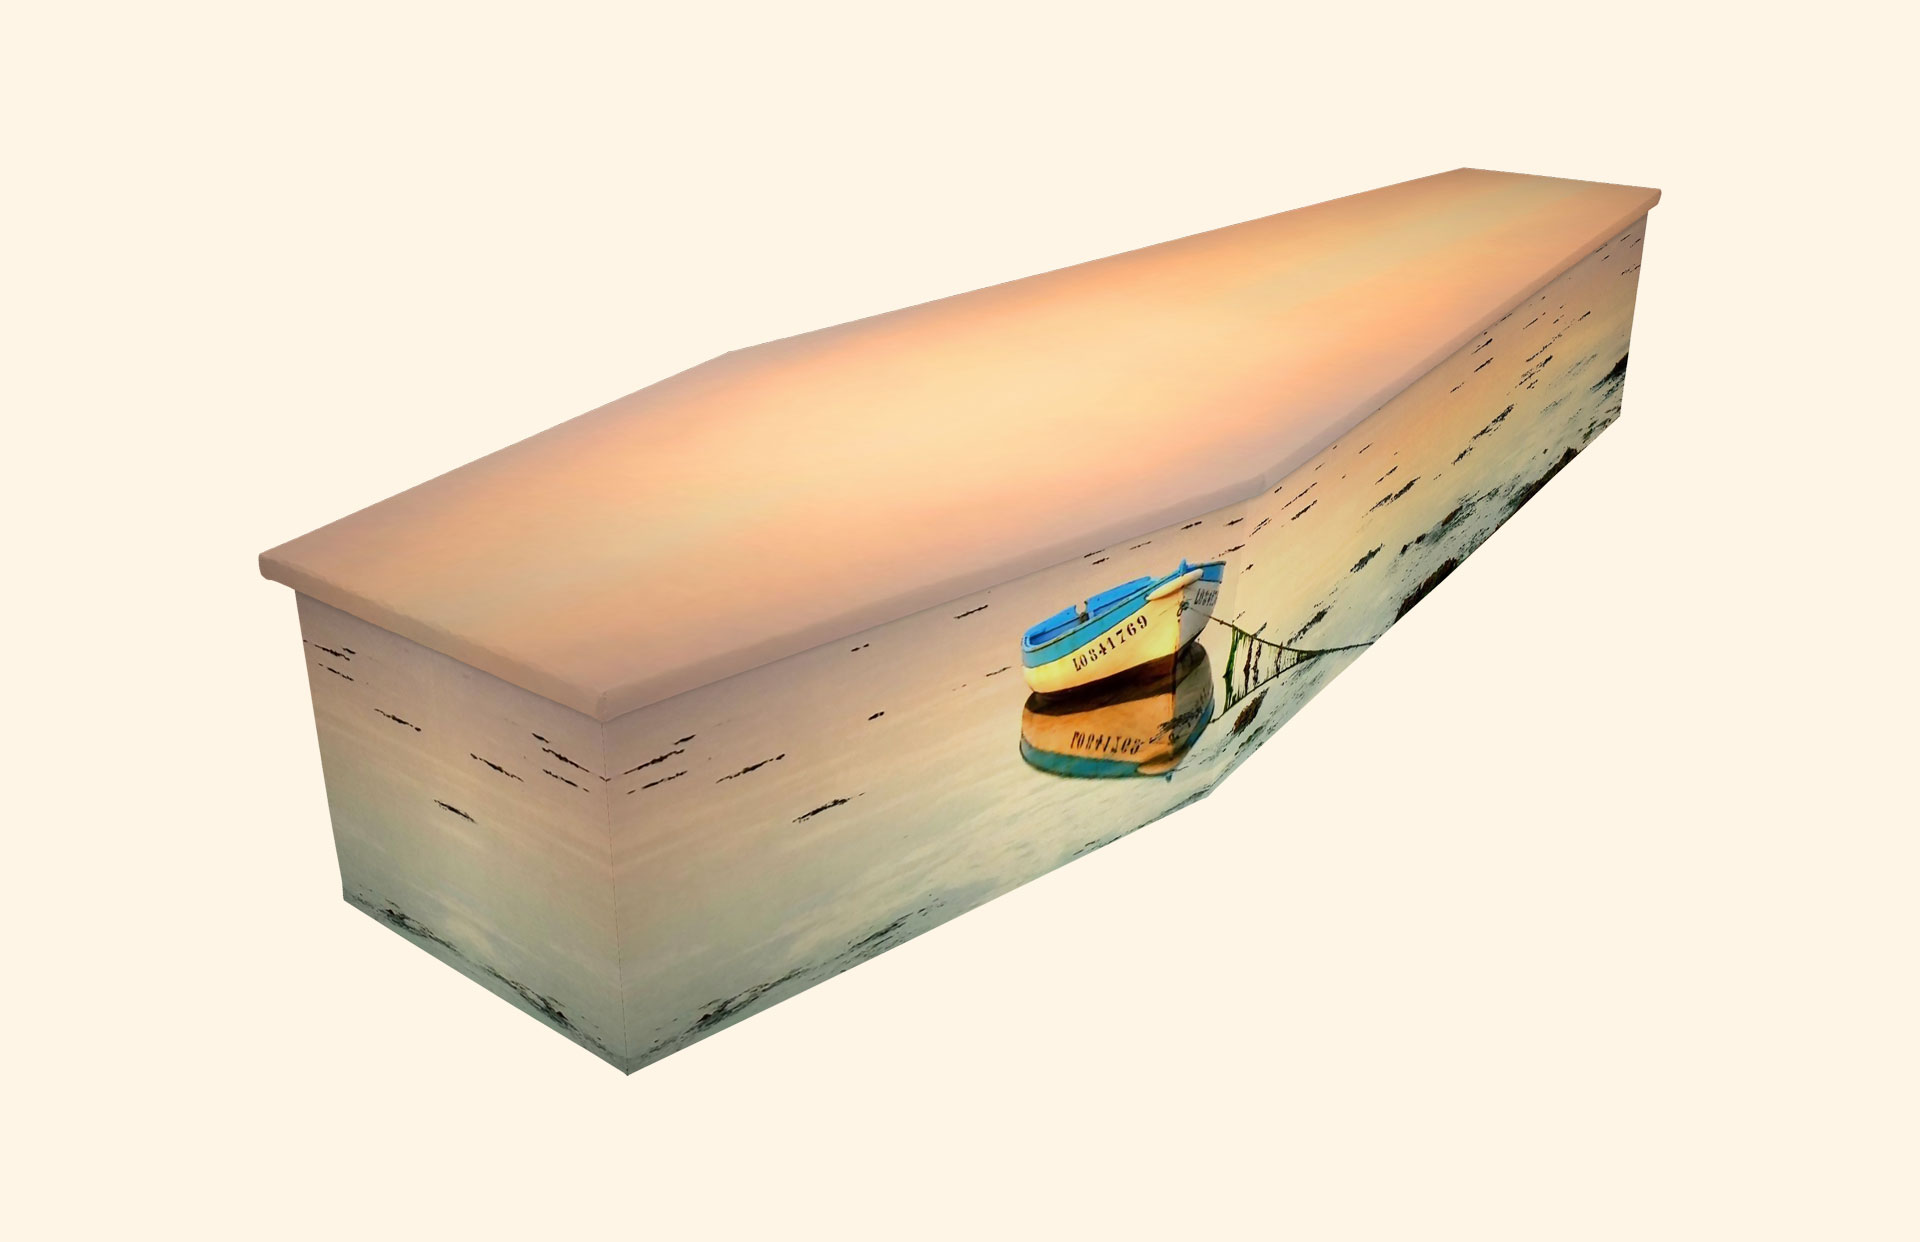 Low Tide design on a cardboard coffin